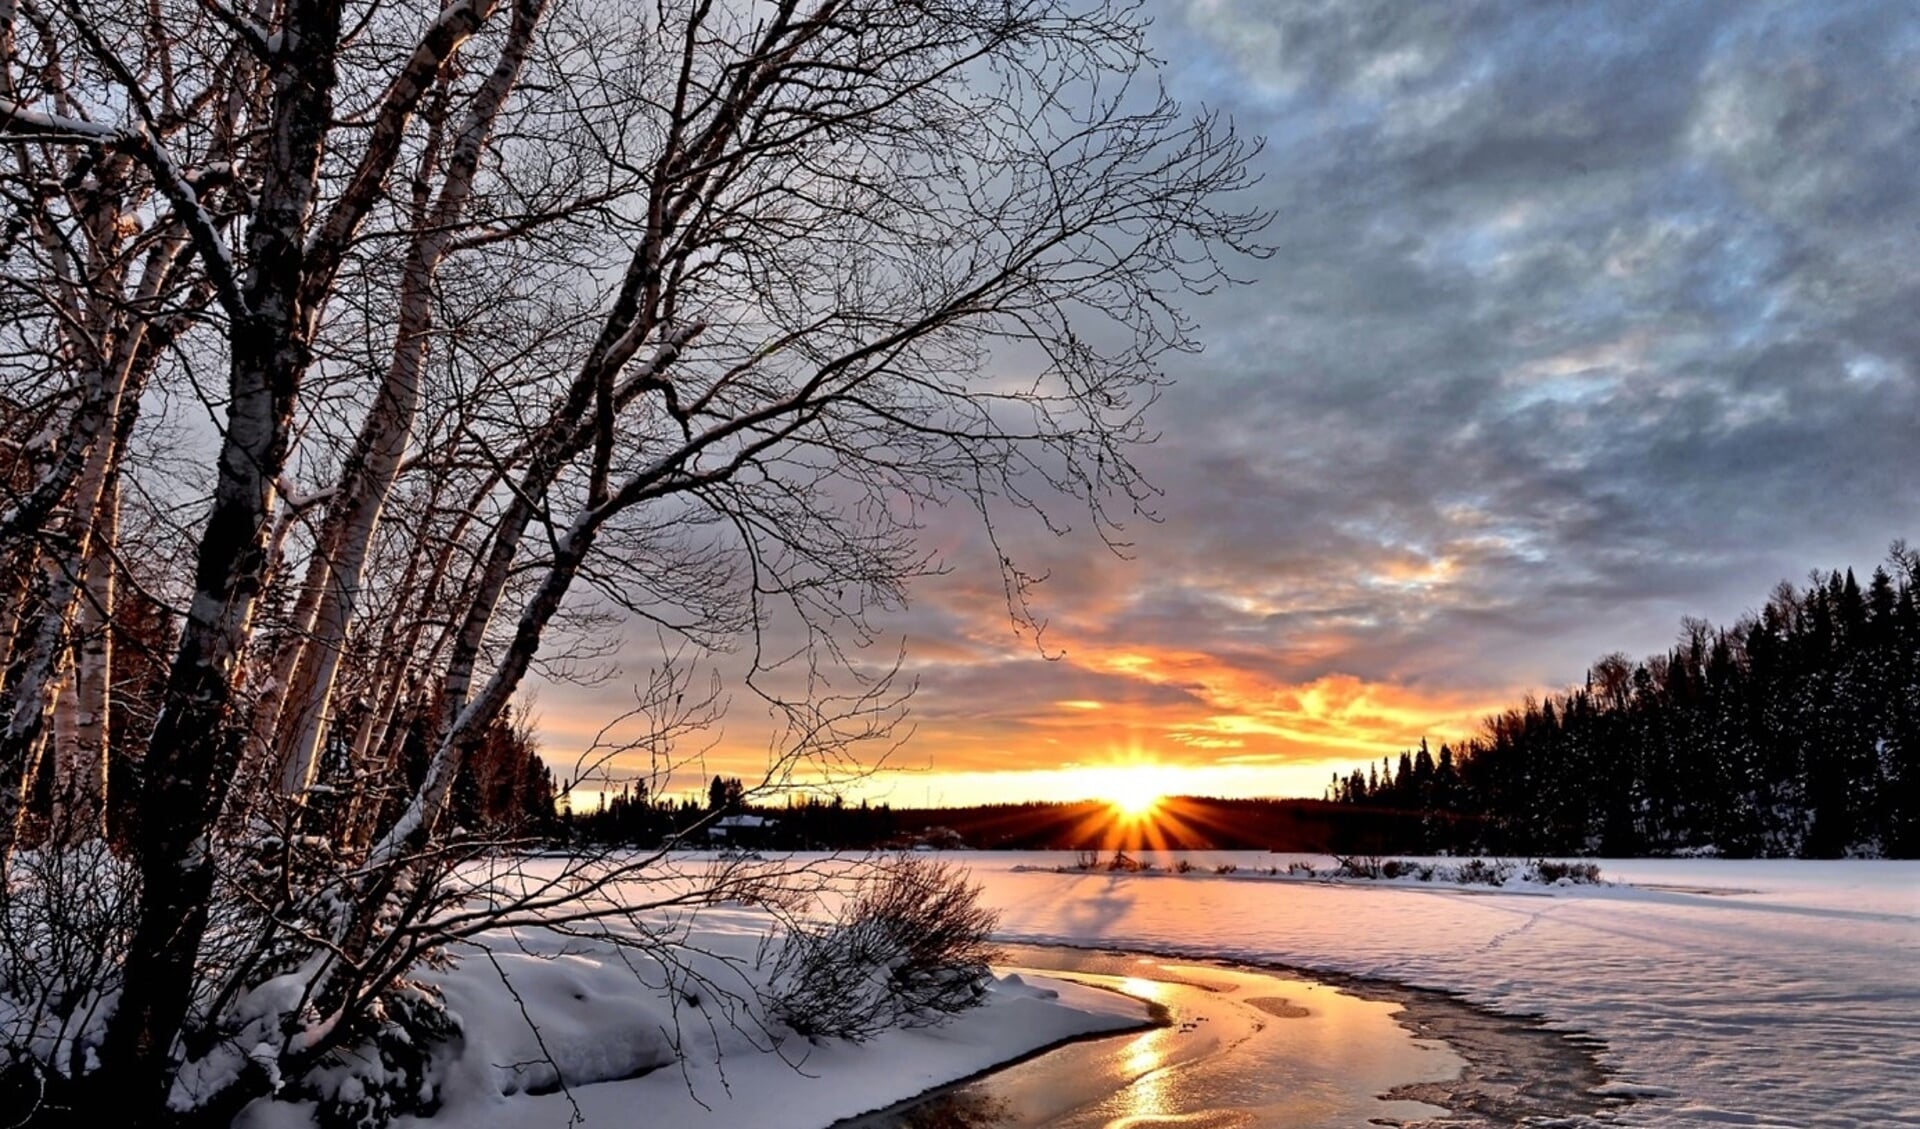 https://pixabay.com/photos/winter-landscape-sunset-twilight-2995987/